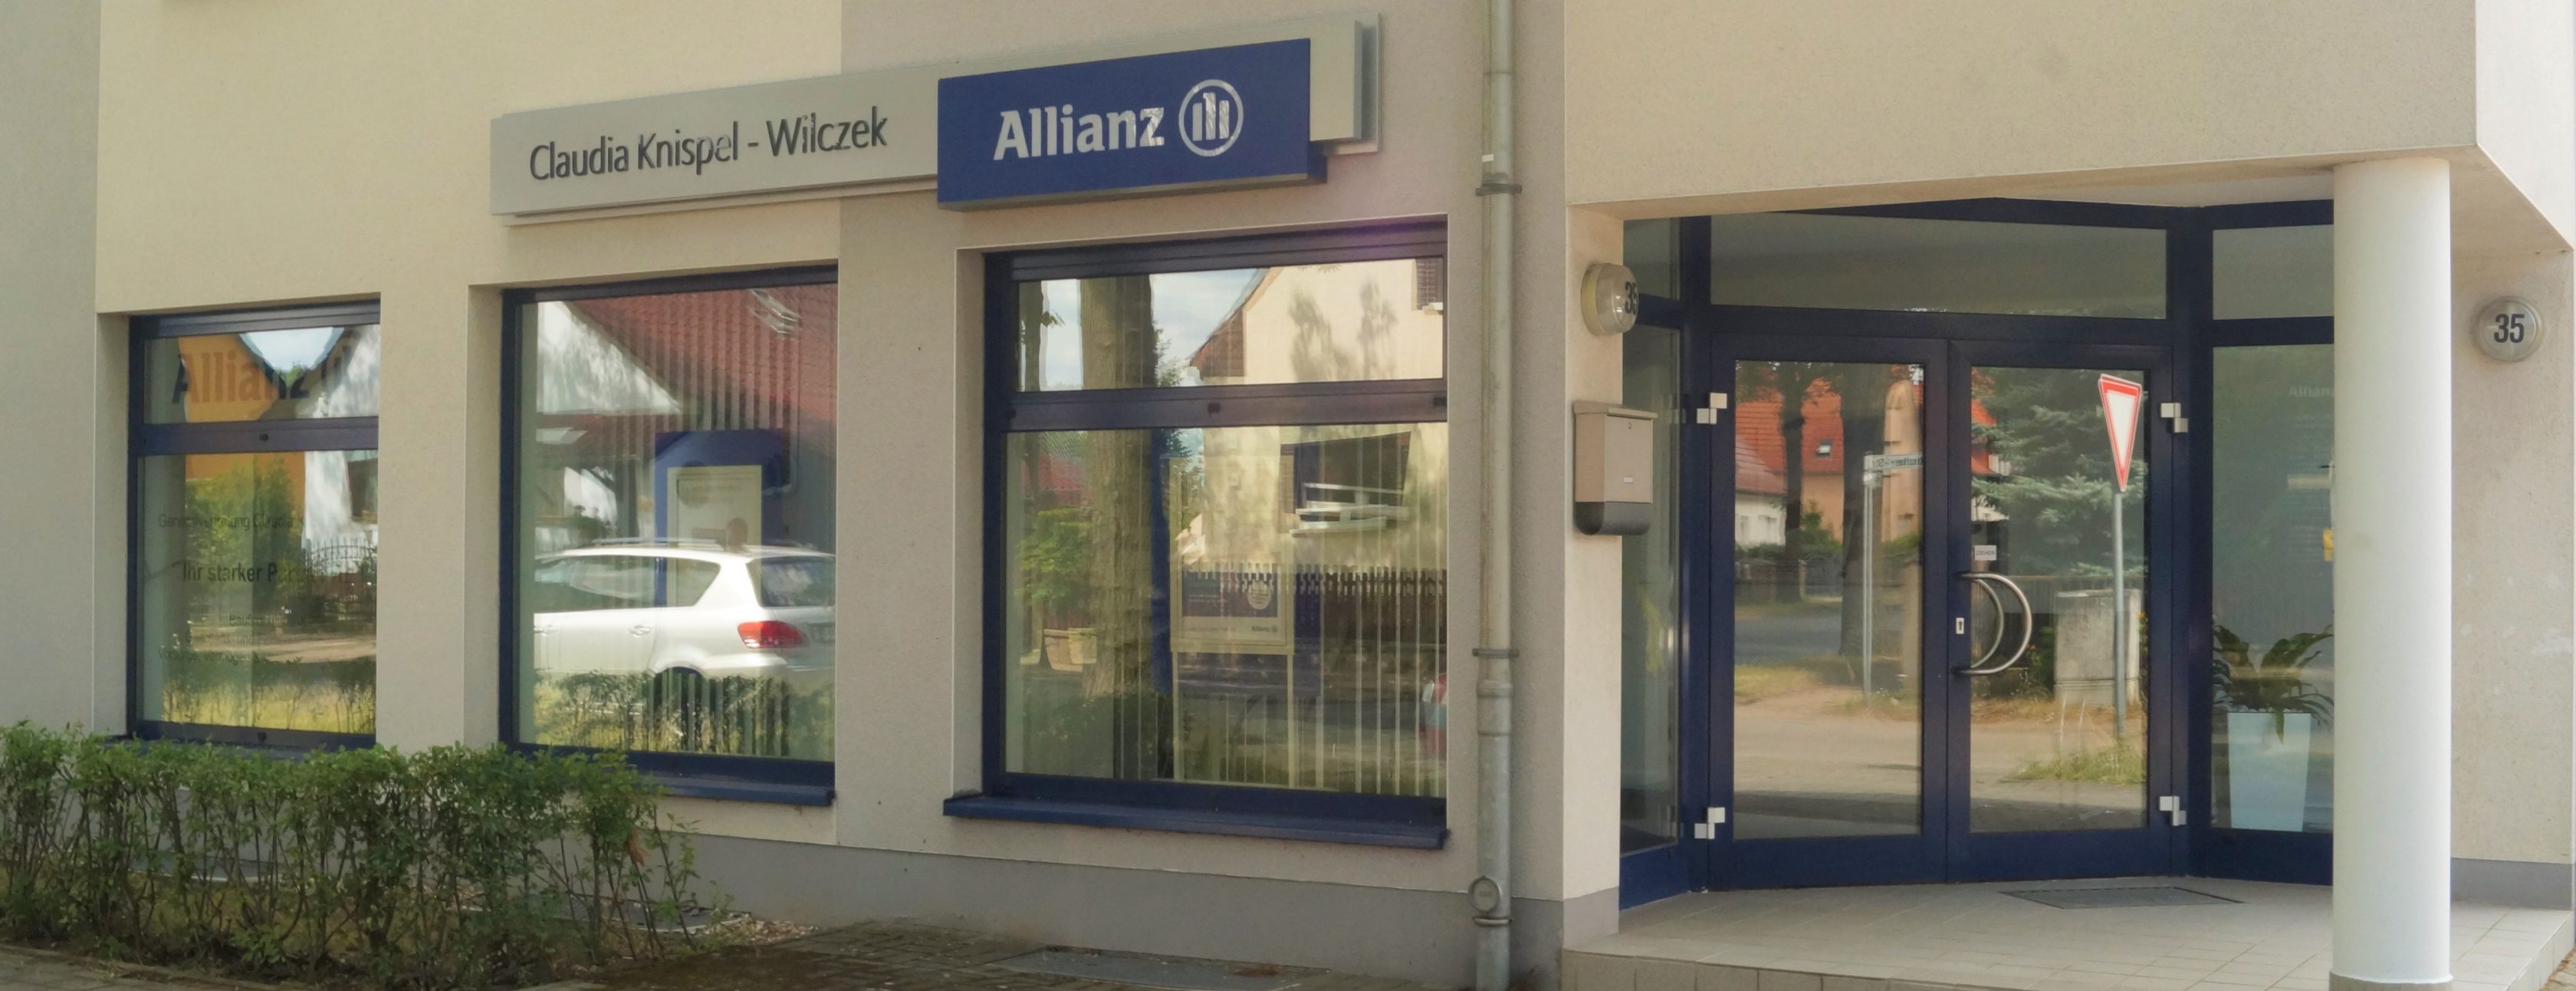 Allianz Versicherung Claudia Knispel-Wilczek Fürstenwalde/Spree - Allianz Fürstenwalde Knispel-Wilczek